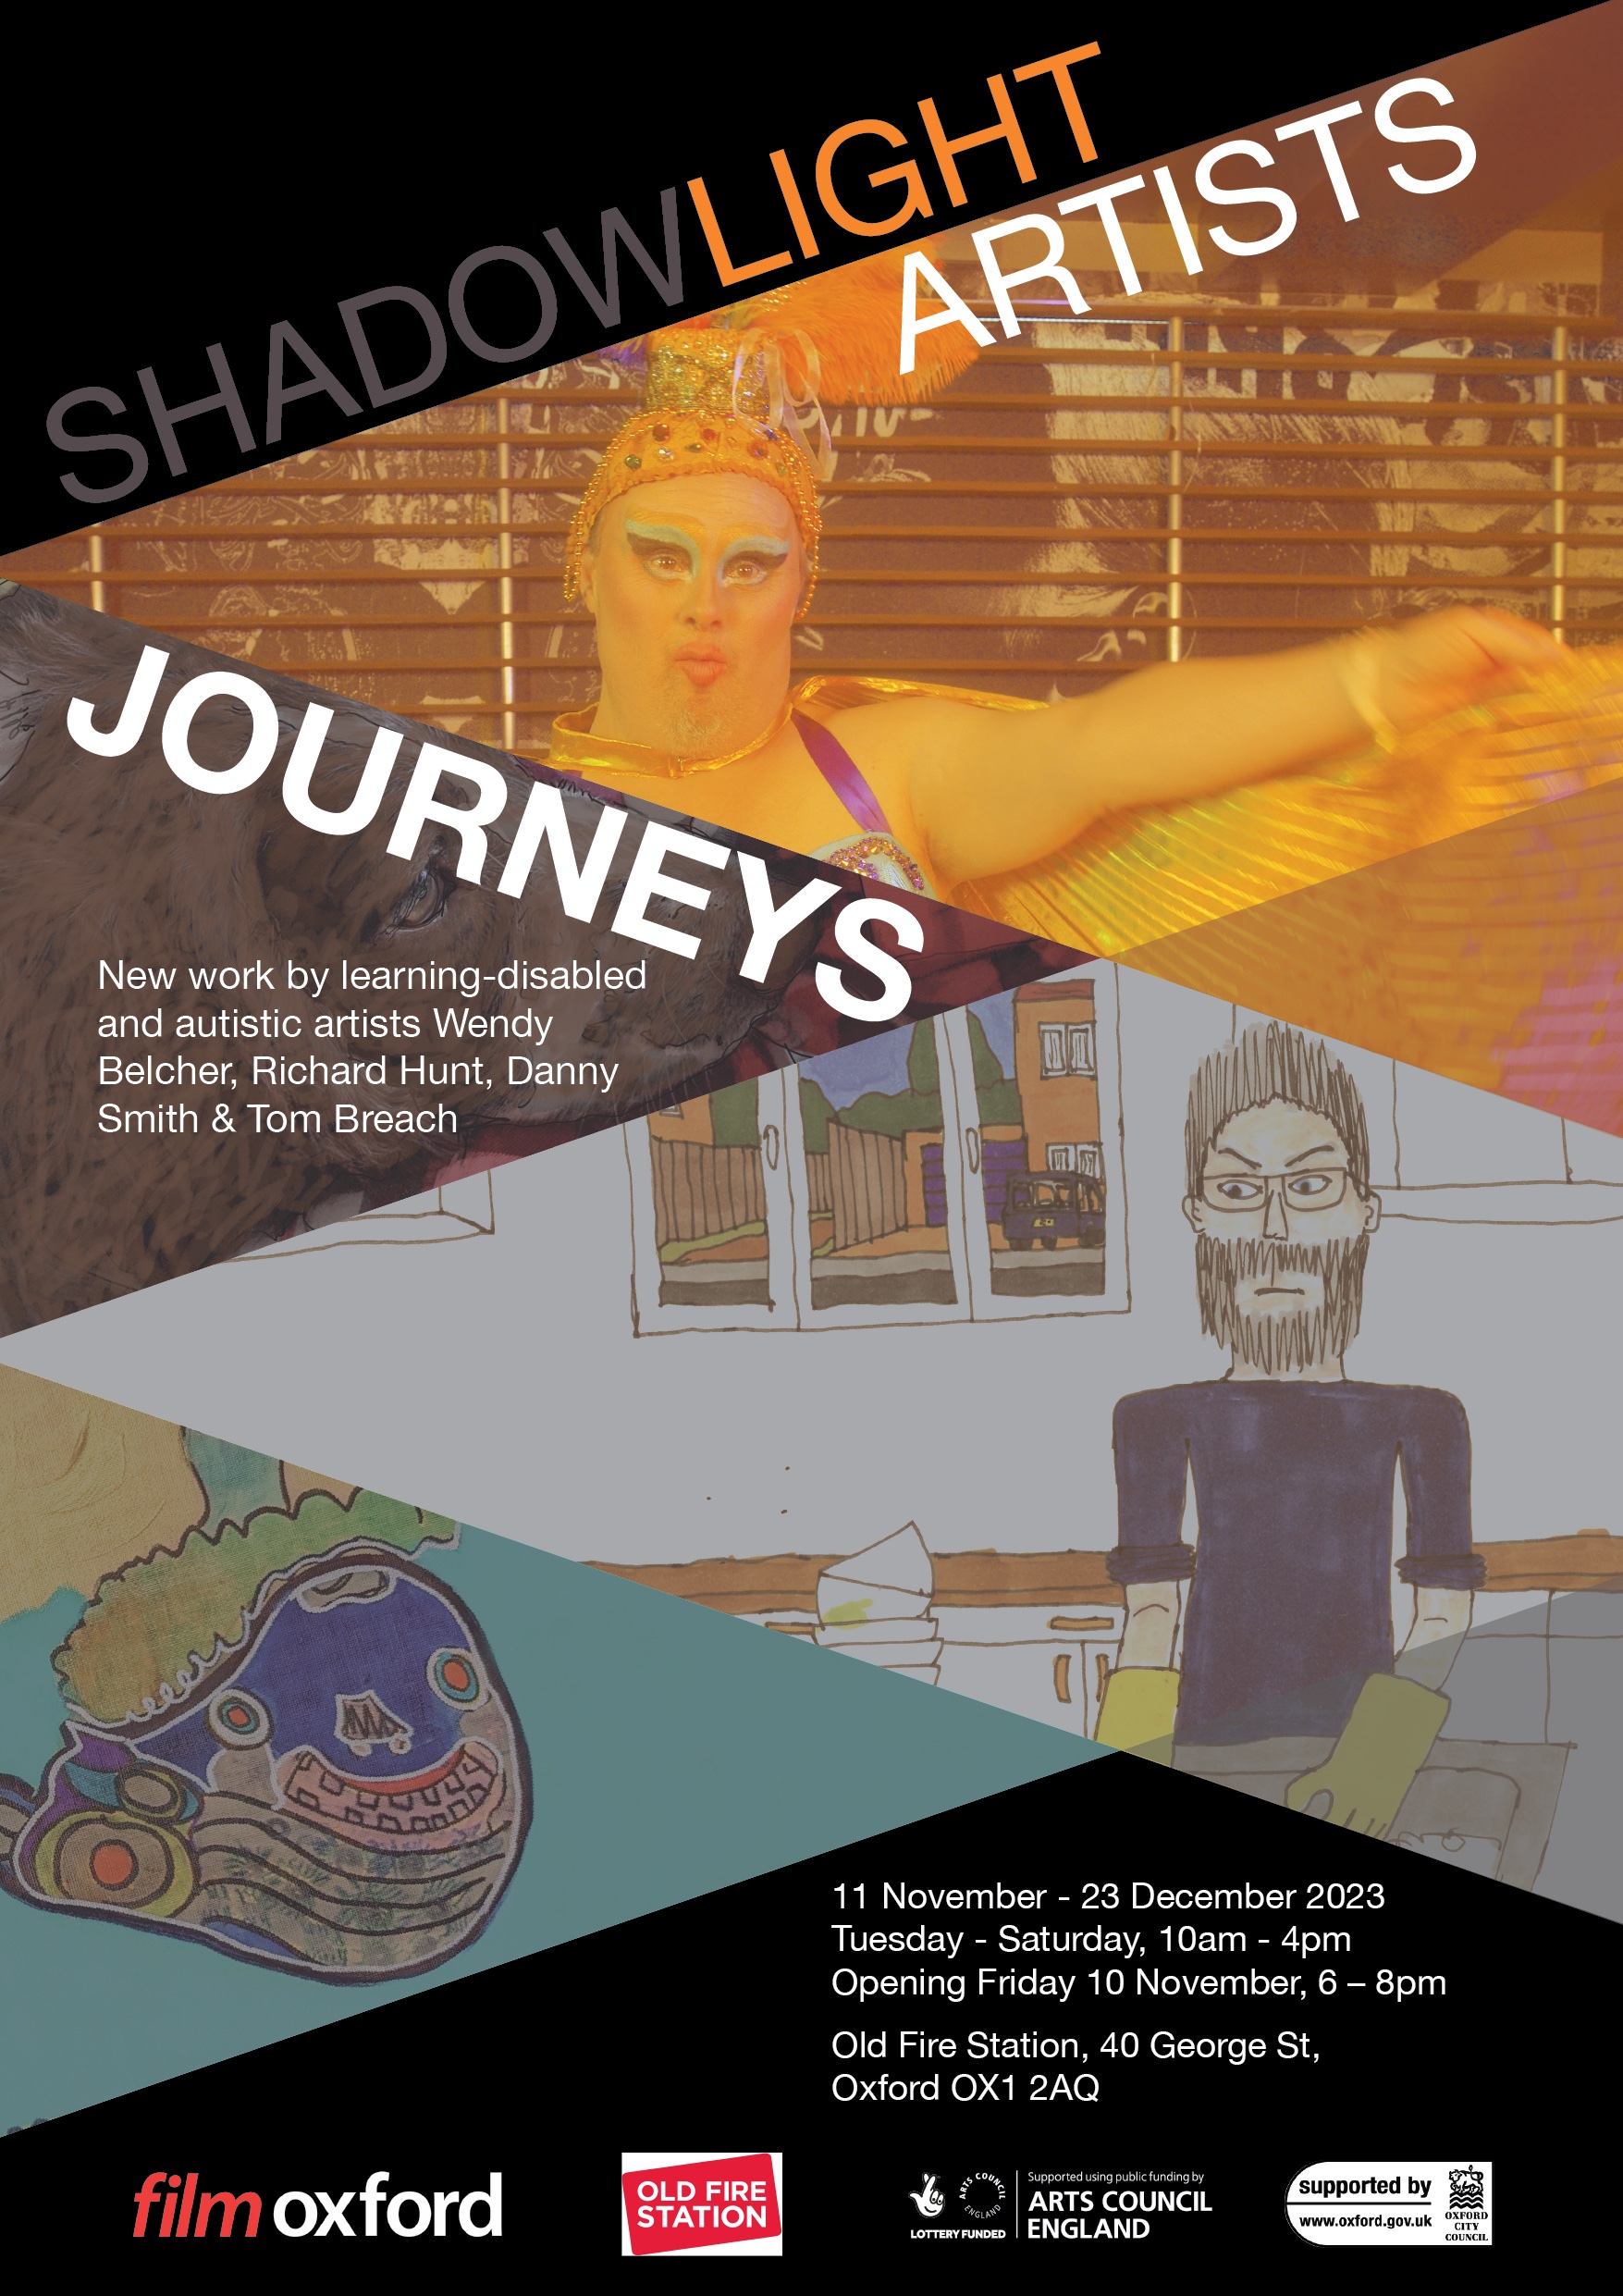 Shadowlight Artists - Journeys exhibition